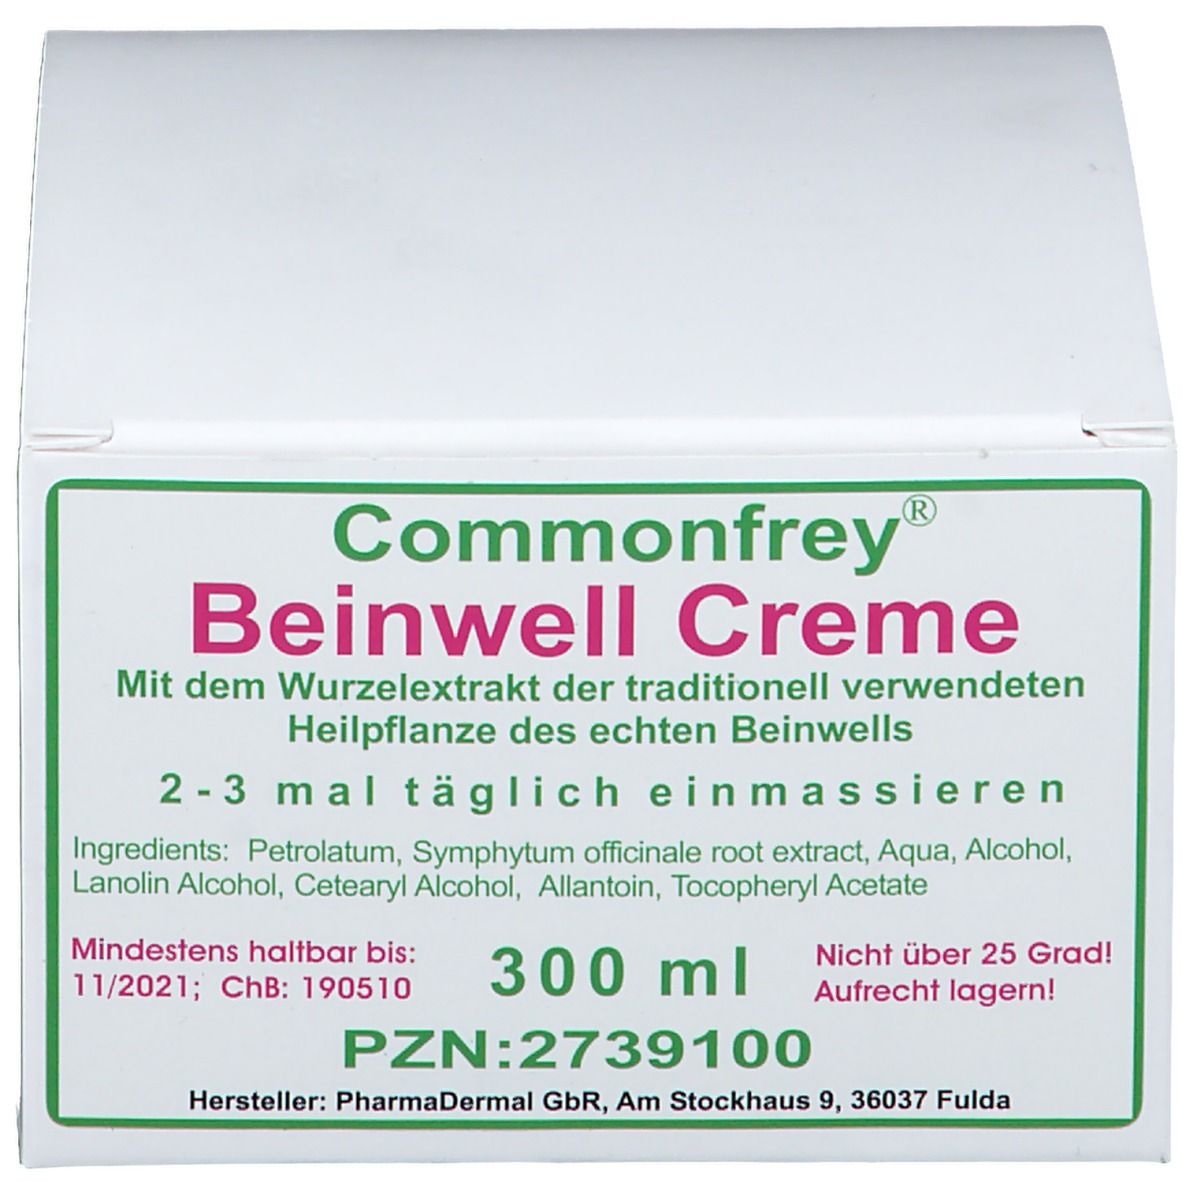 Commonfrey® Beinwell Creme